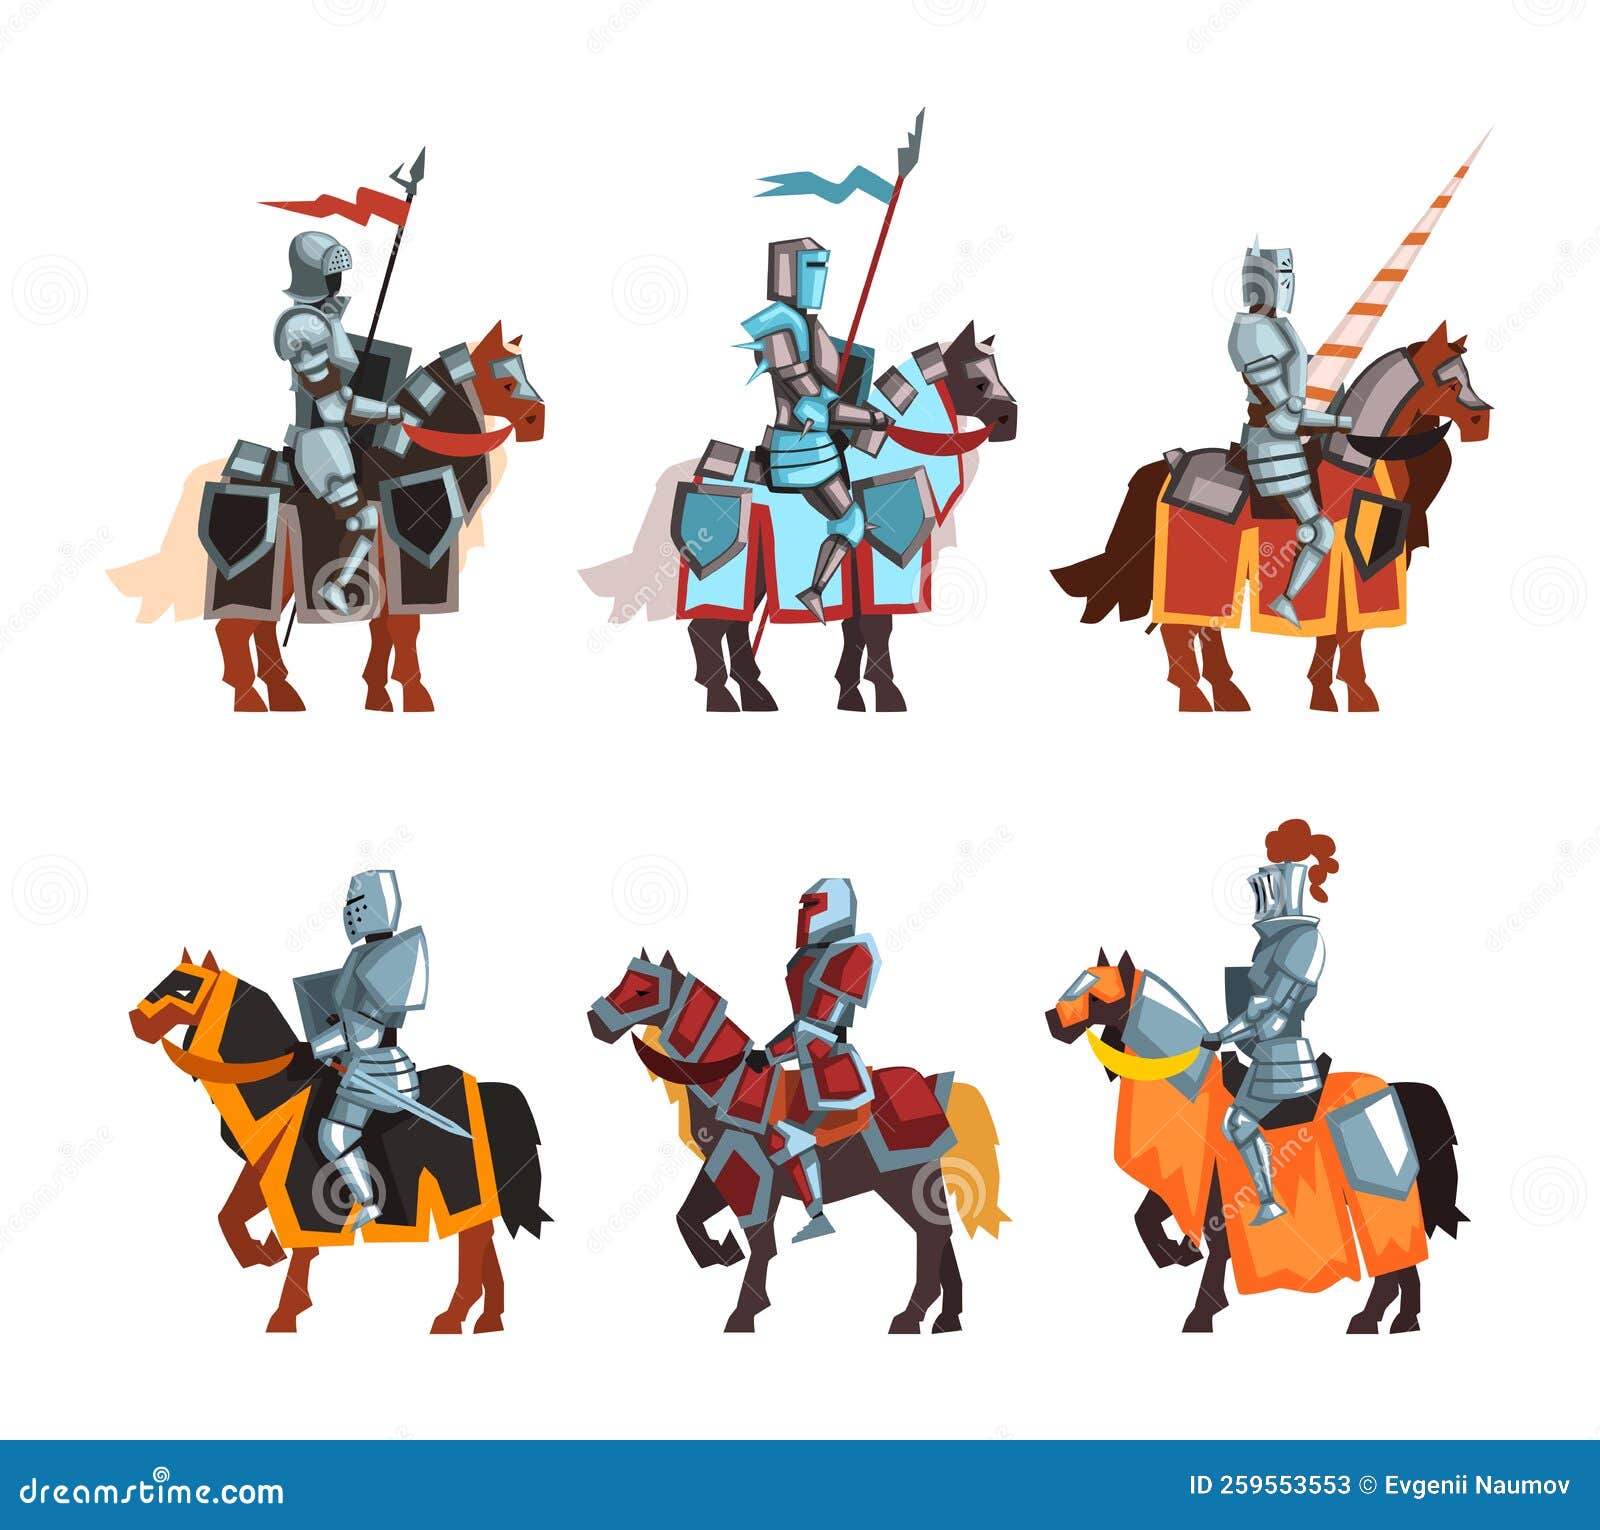 Armored Medieval Knight or Cavalryman Sitting on Horseback Holding